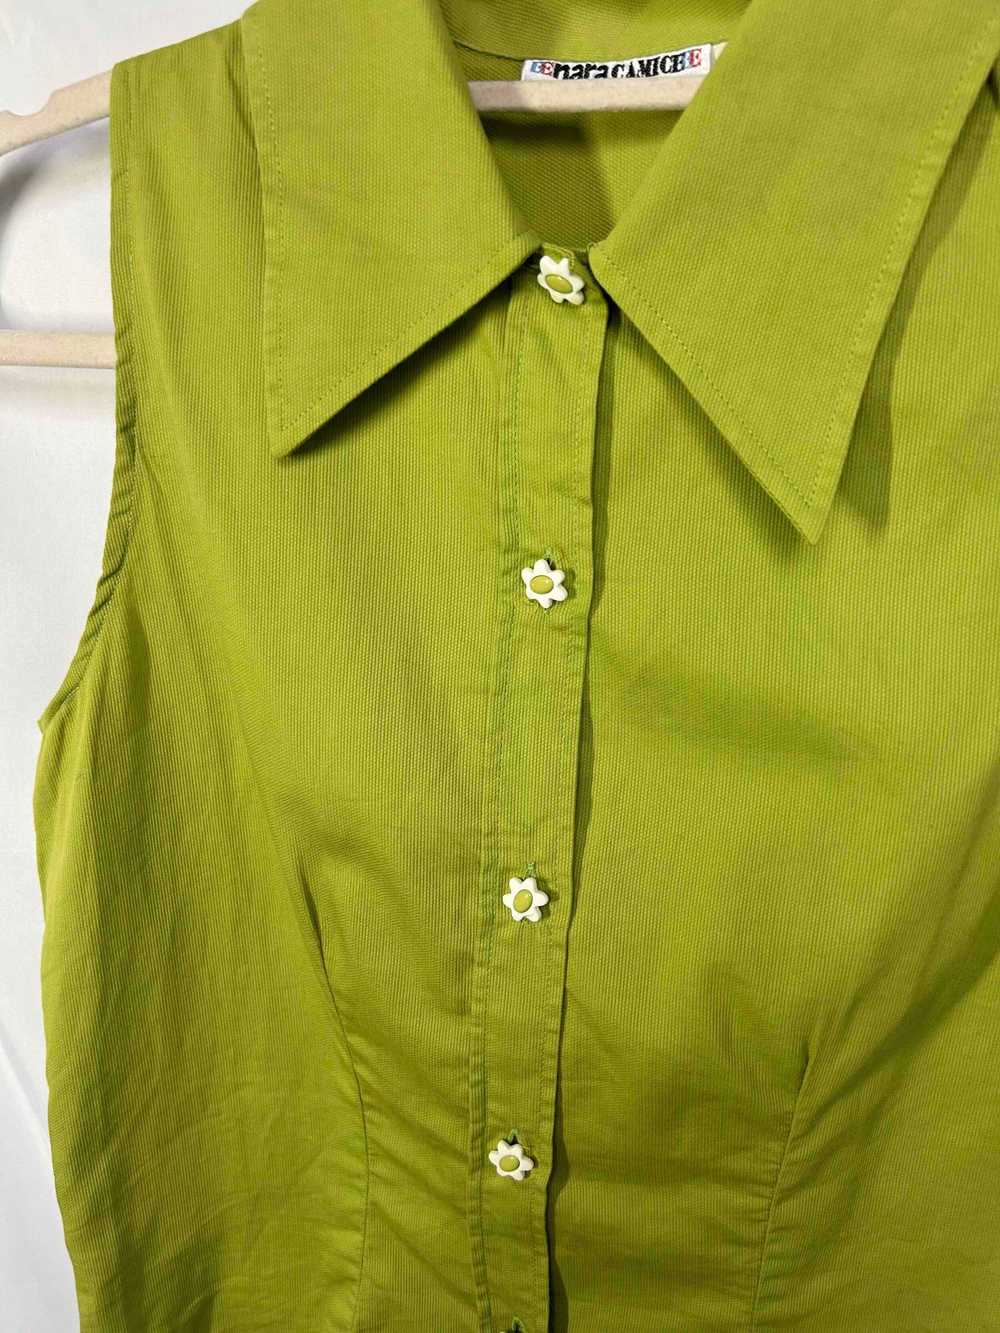 Sleeveless cotton shirt - Vintage sleeveless blou… - image 3